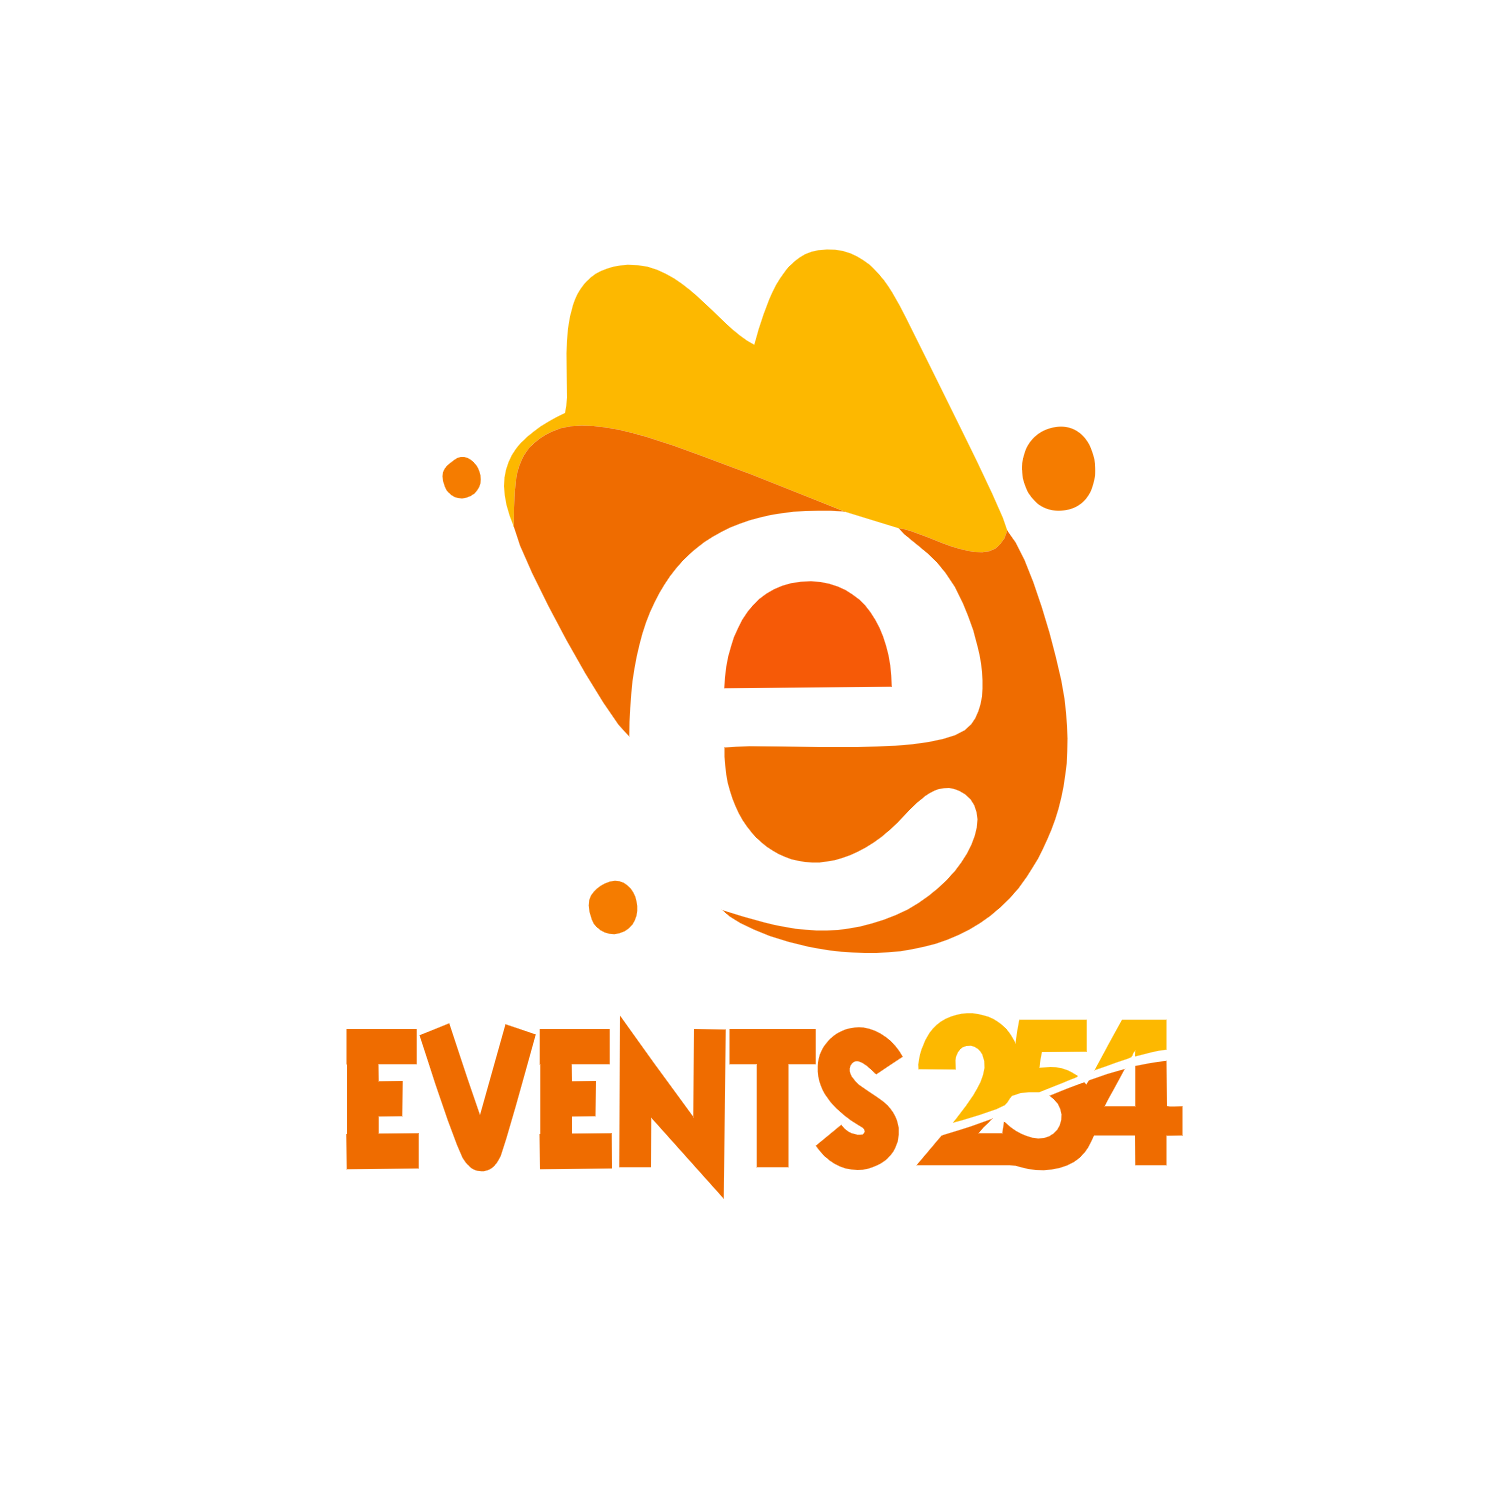 Events254 Arena